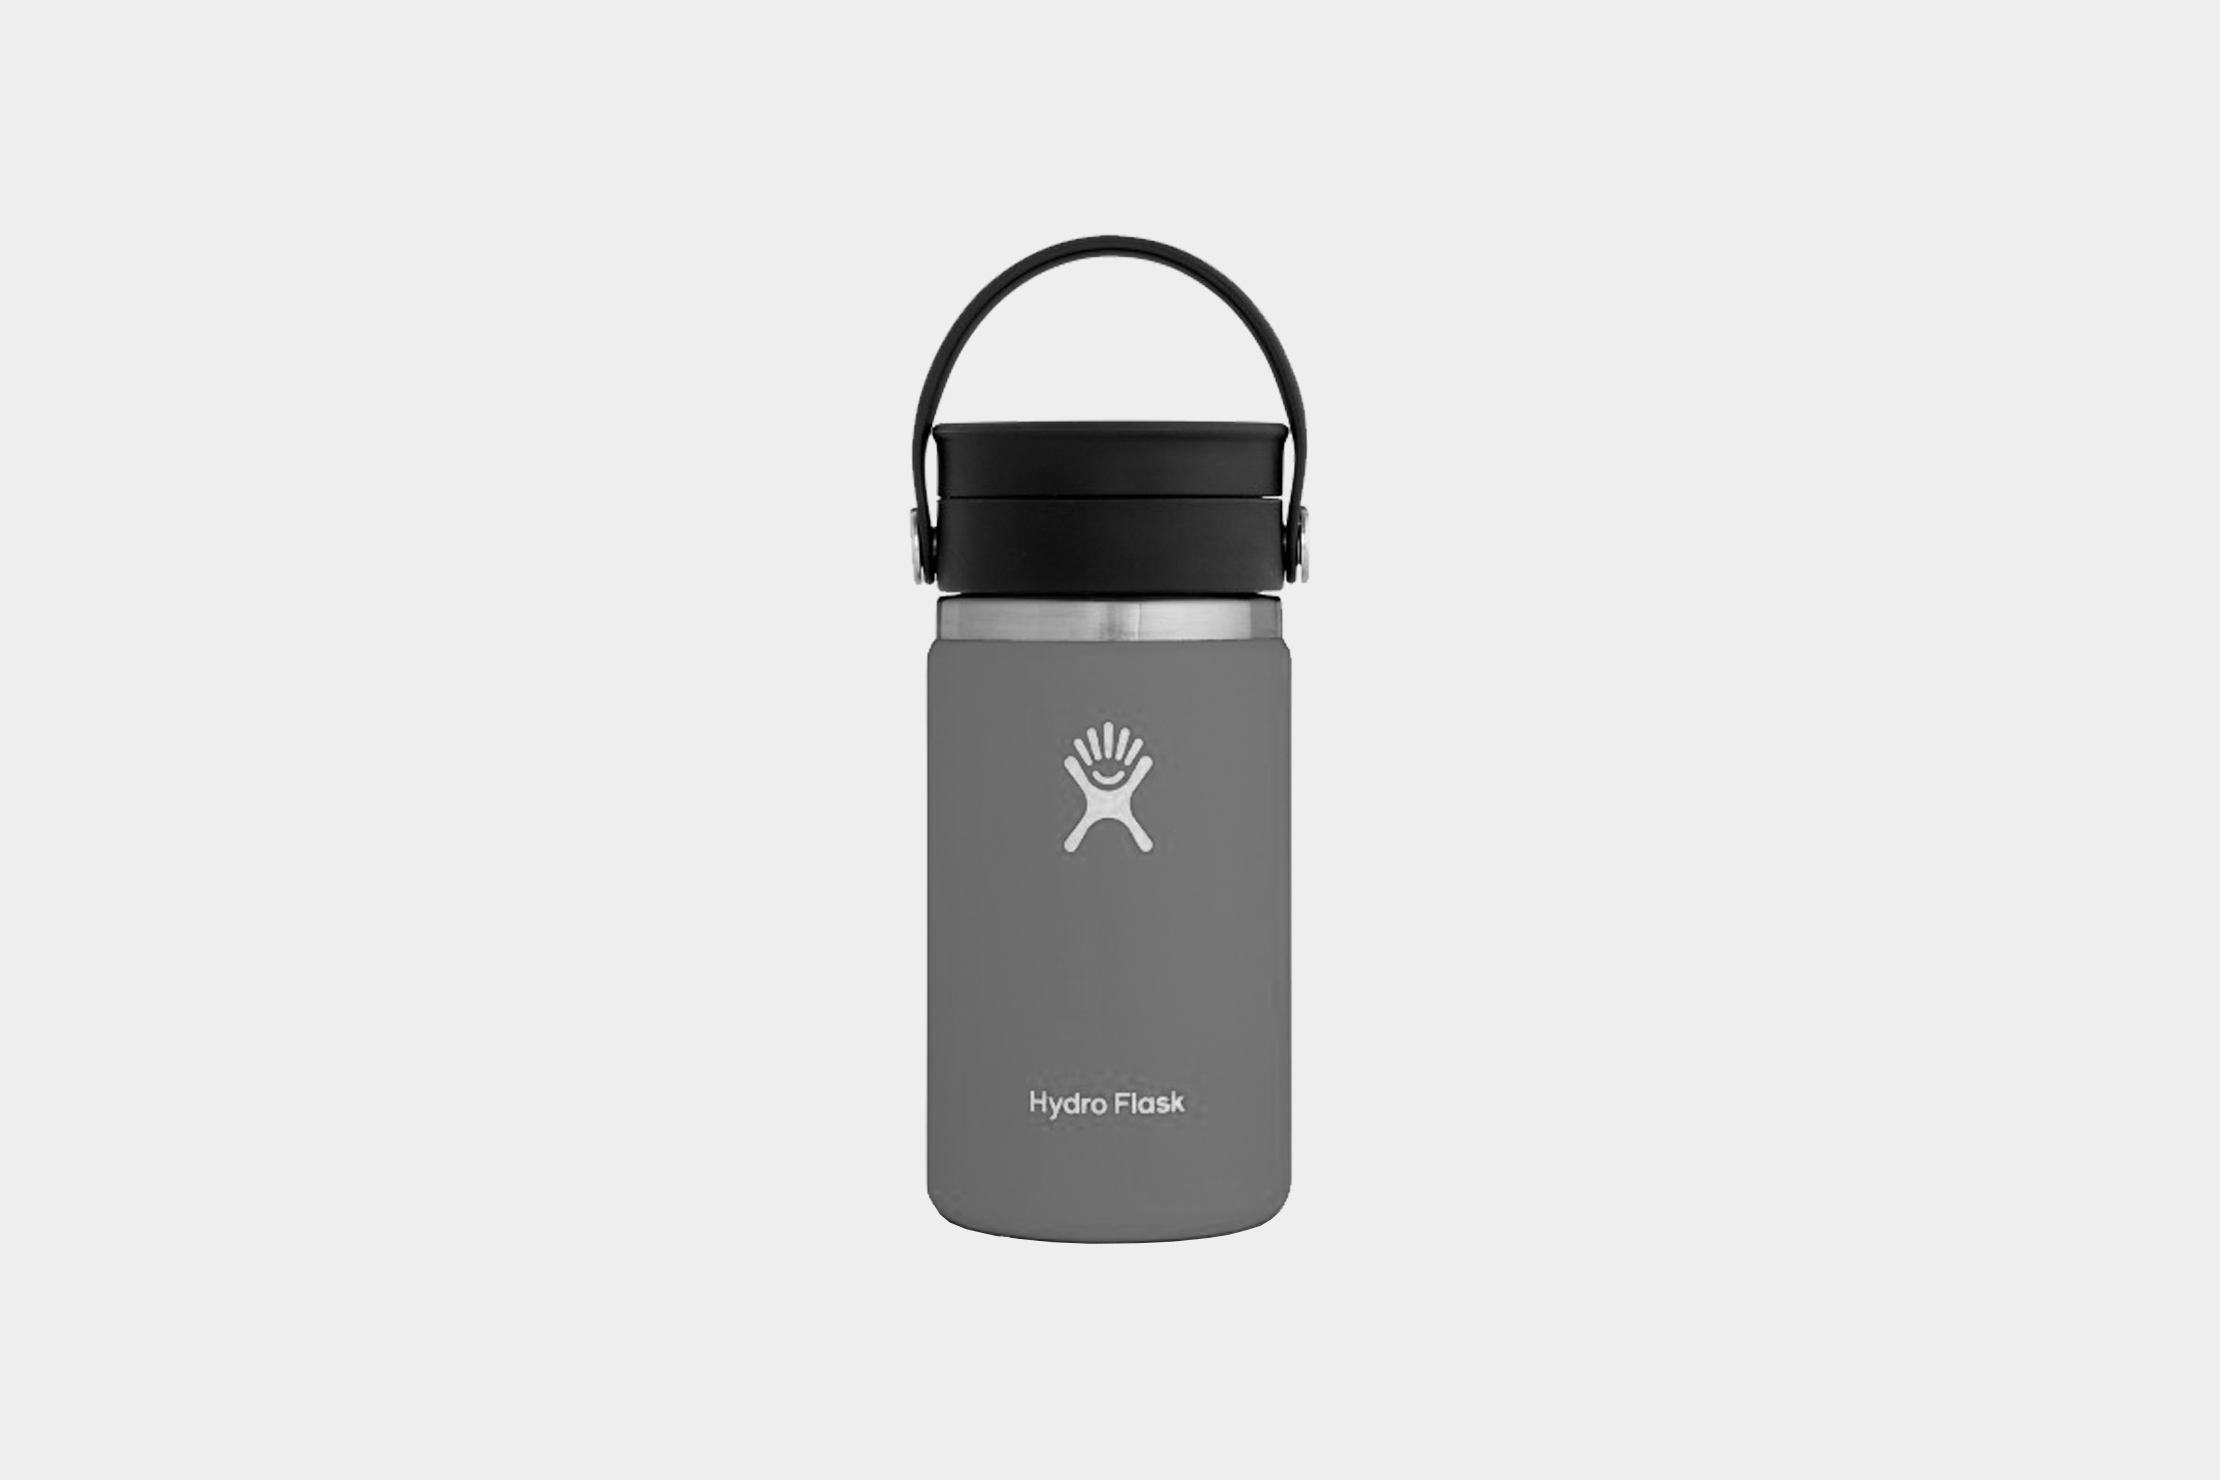 hydro flask coffee mug lid